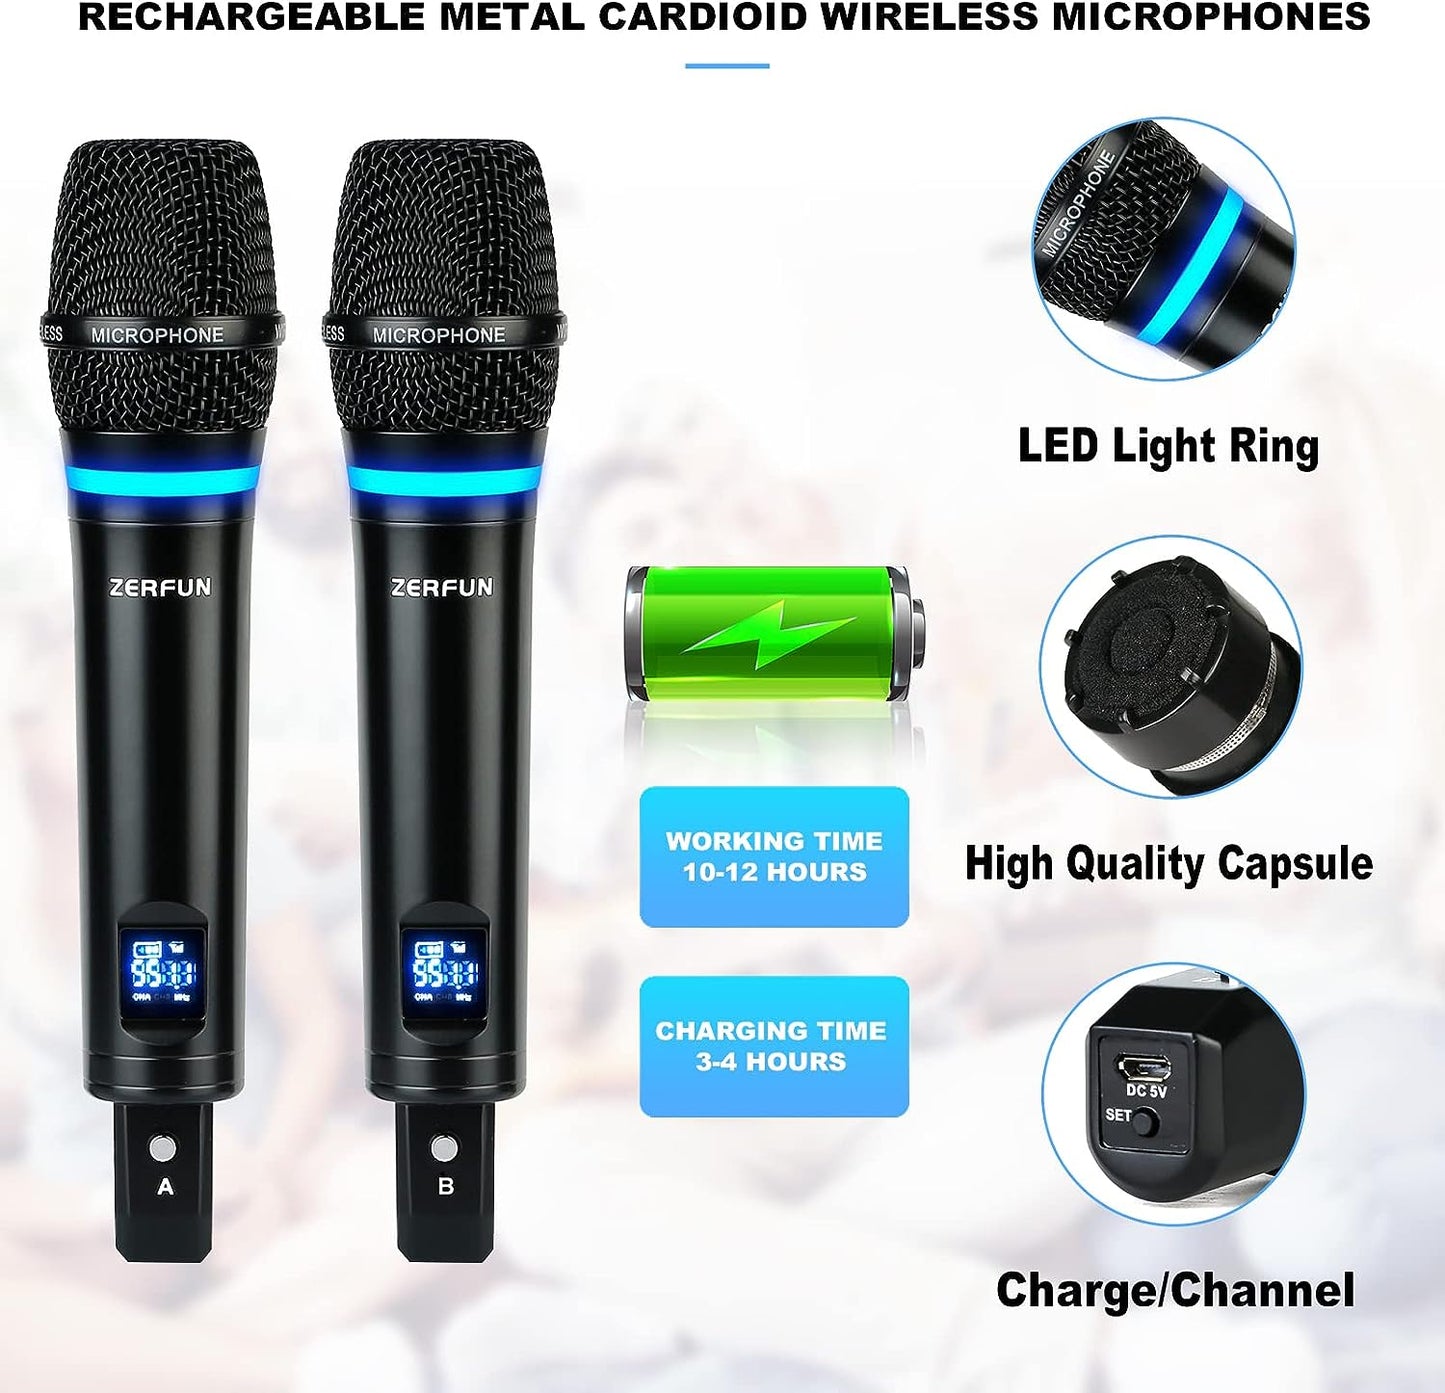 ZERFUN MU-898 Rechargeable Wireless Microphone System 4 Channel, UHF Metal Karaoke Mics Cordless Pro Handheld for Singing Church, Bluetooth Echo Volume Control,4x50 Frequency,1/8,1/4 O